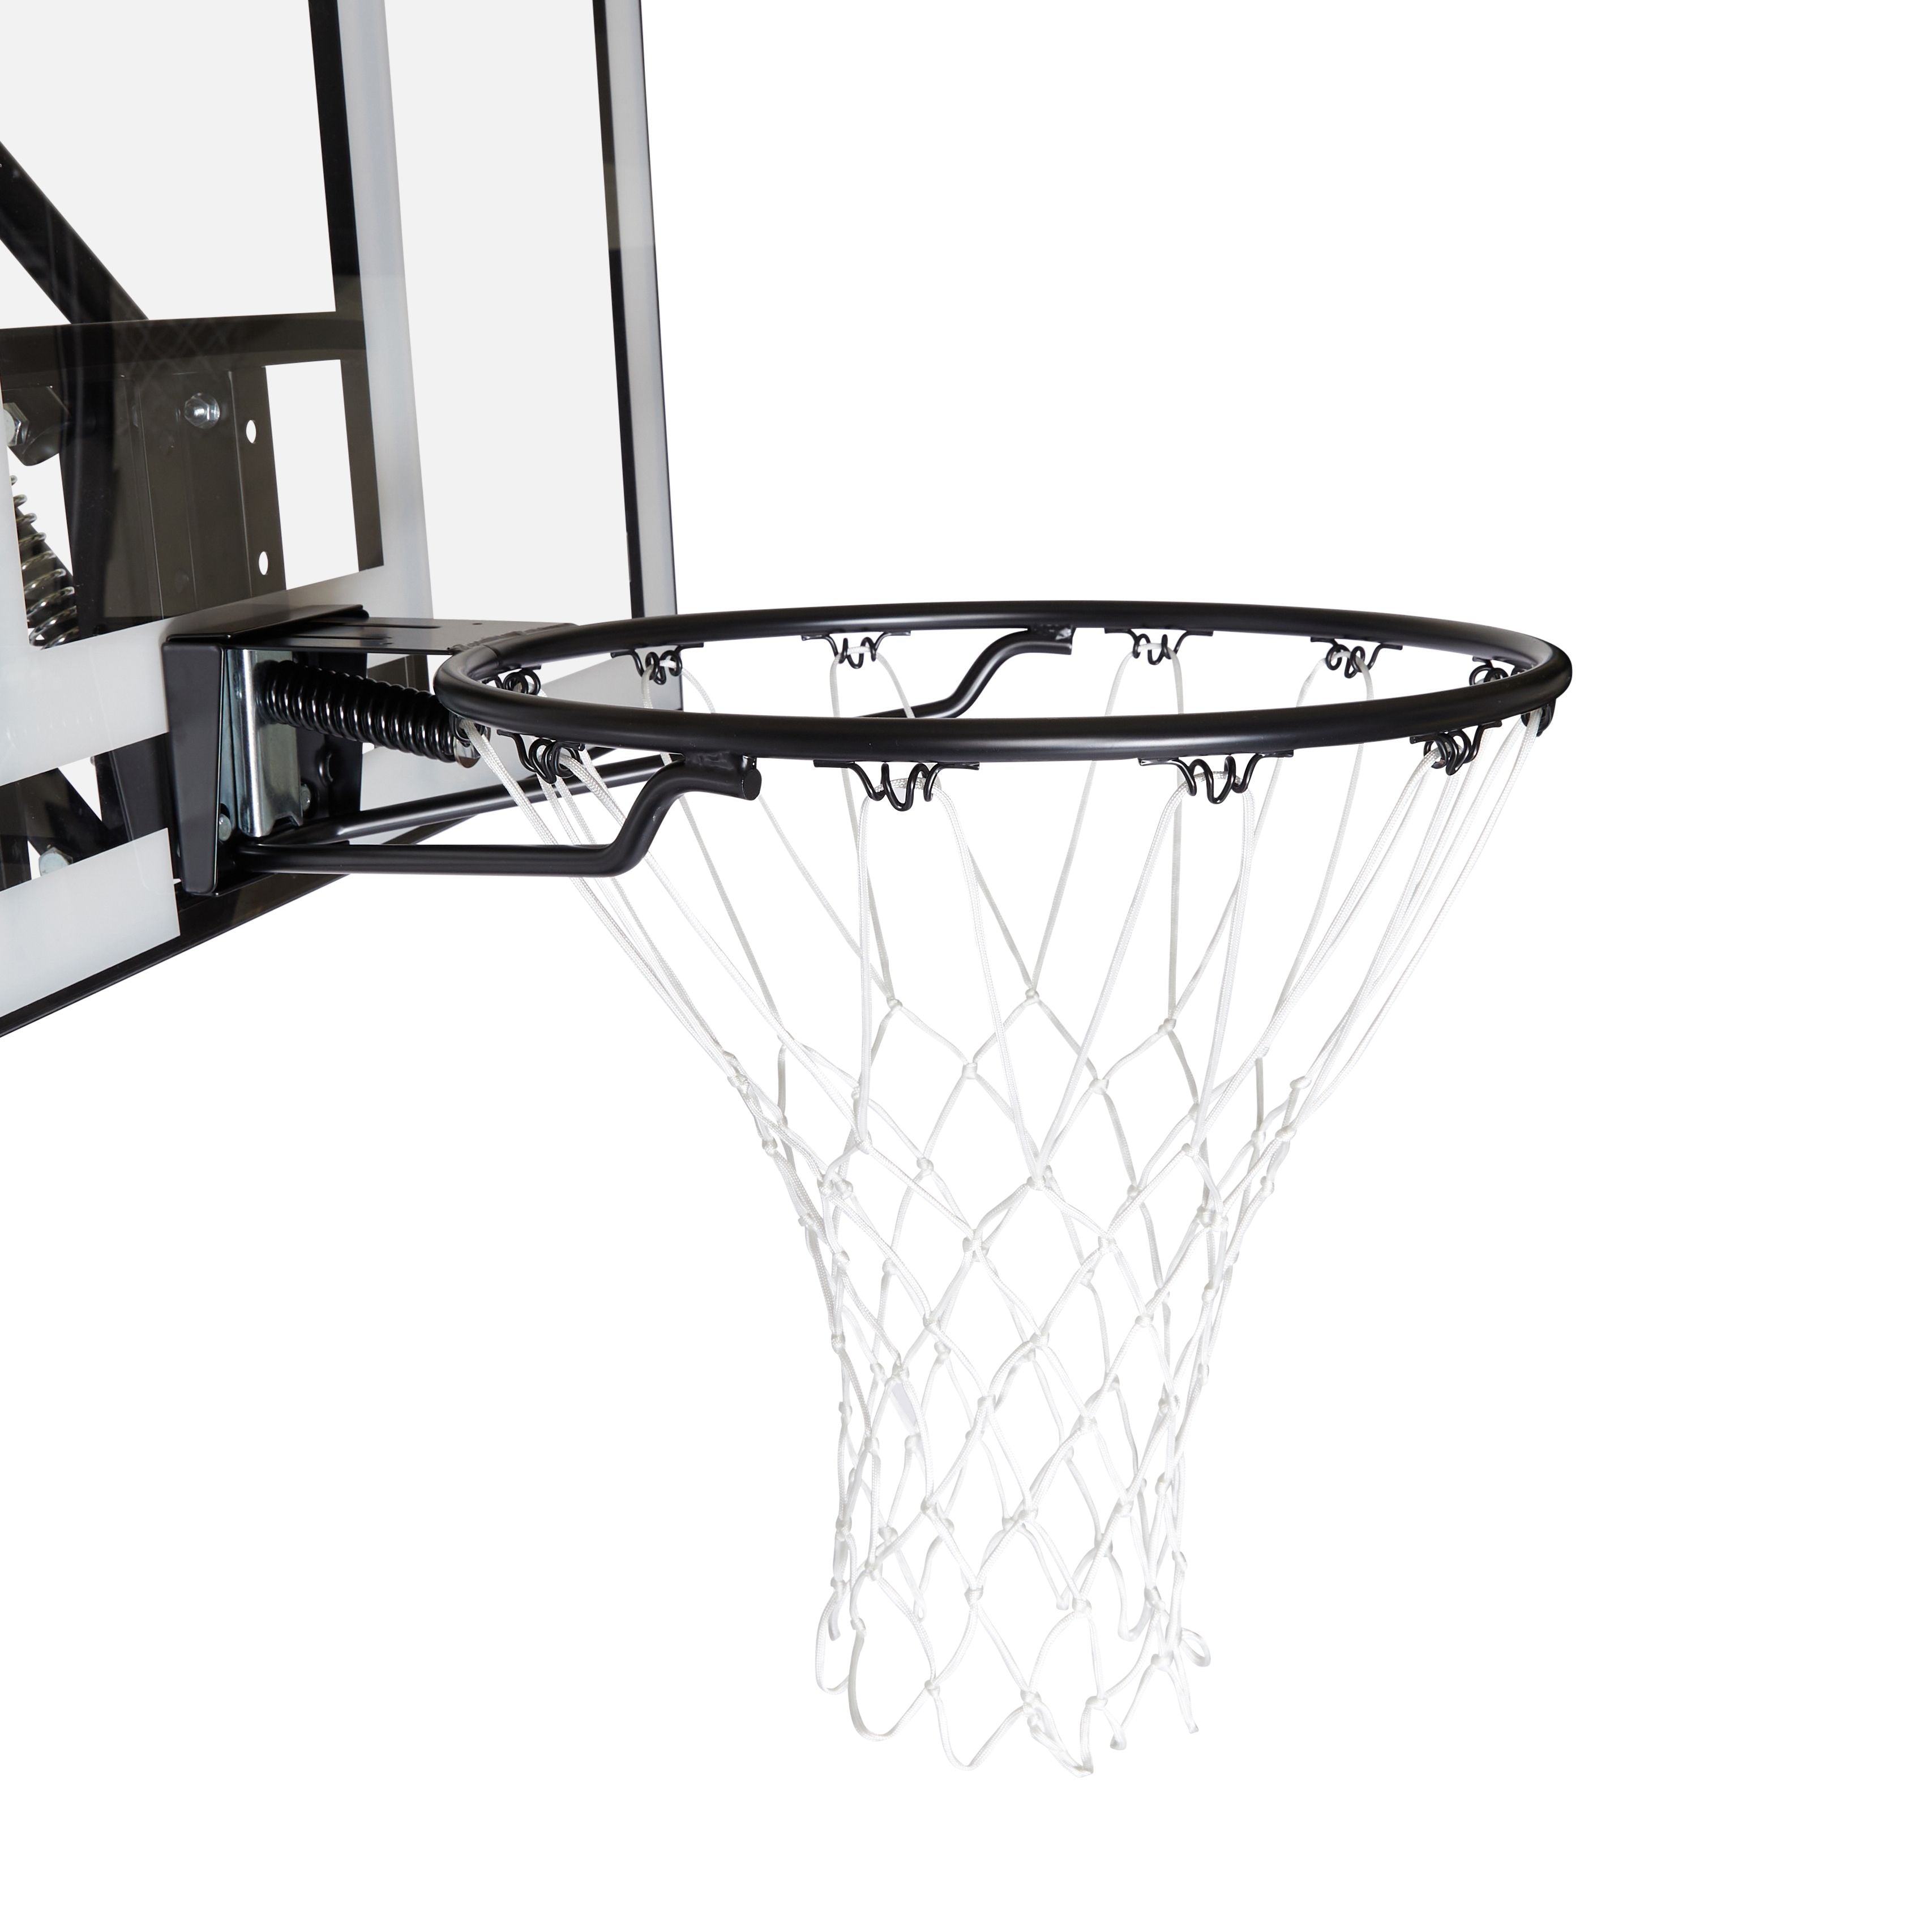 Neti Millennium Basketball Hoop